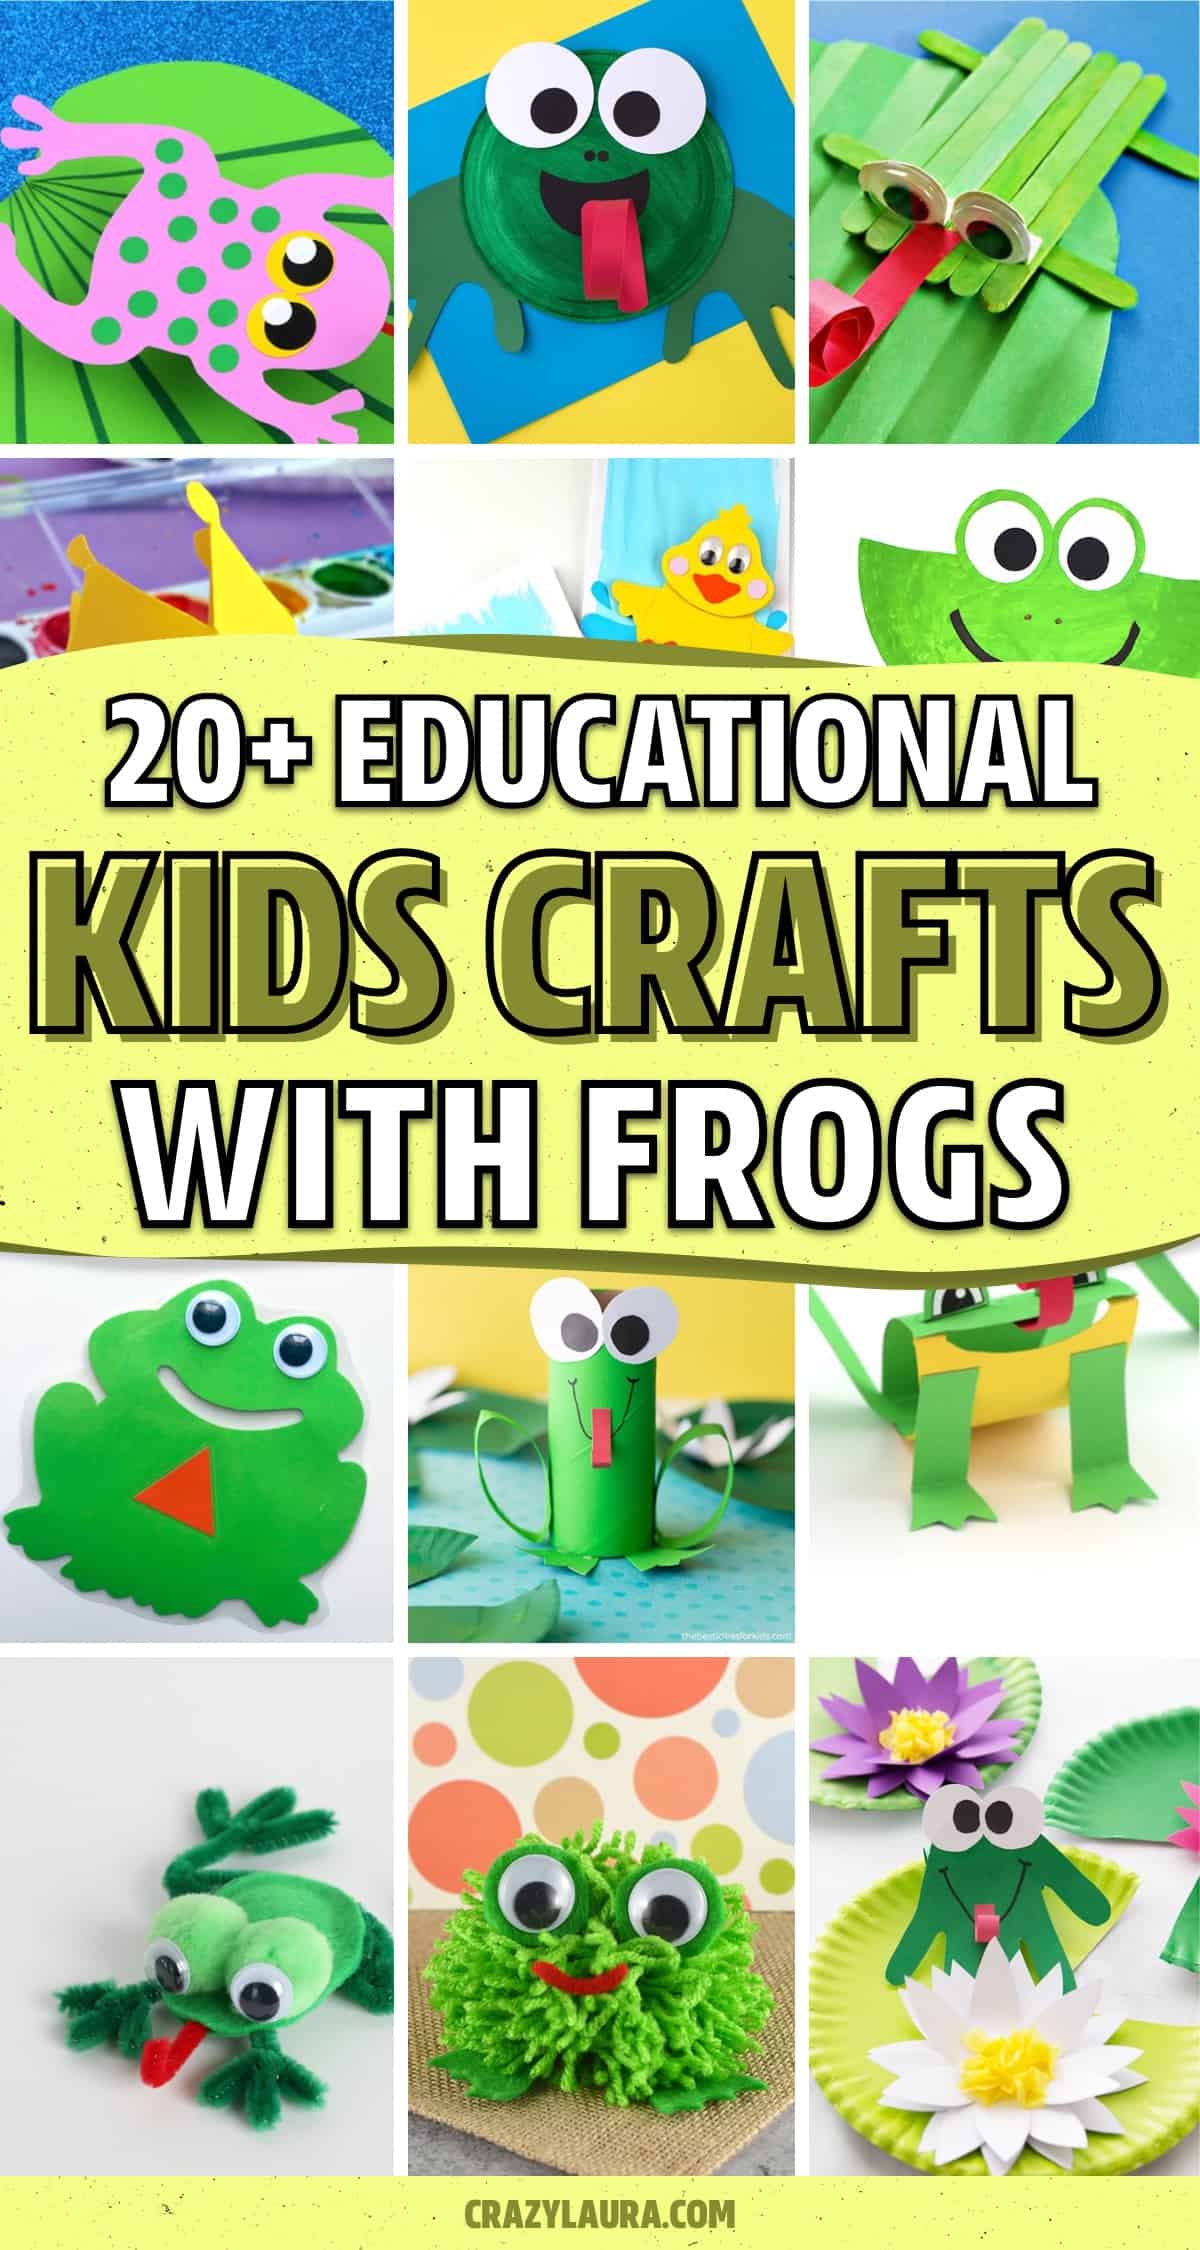 frog crafts to teach kids